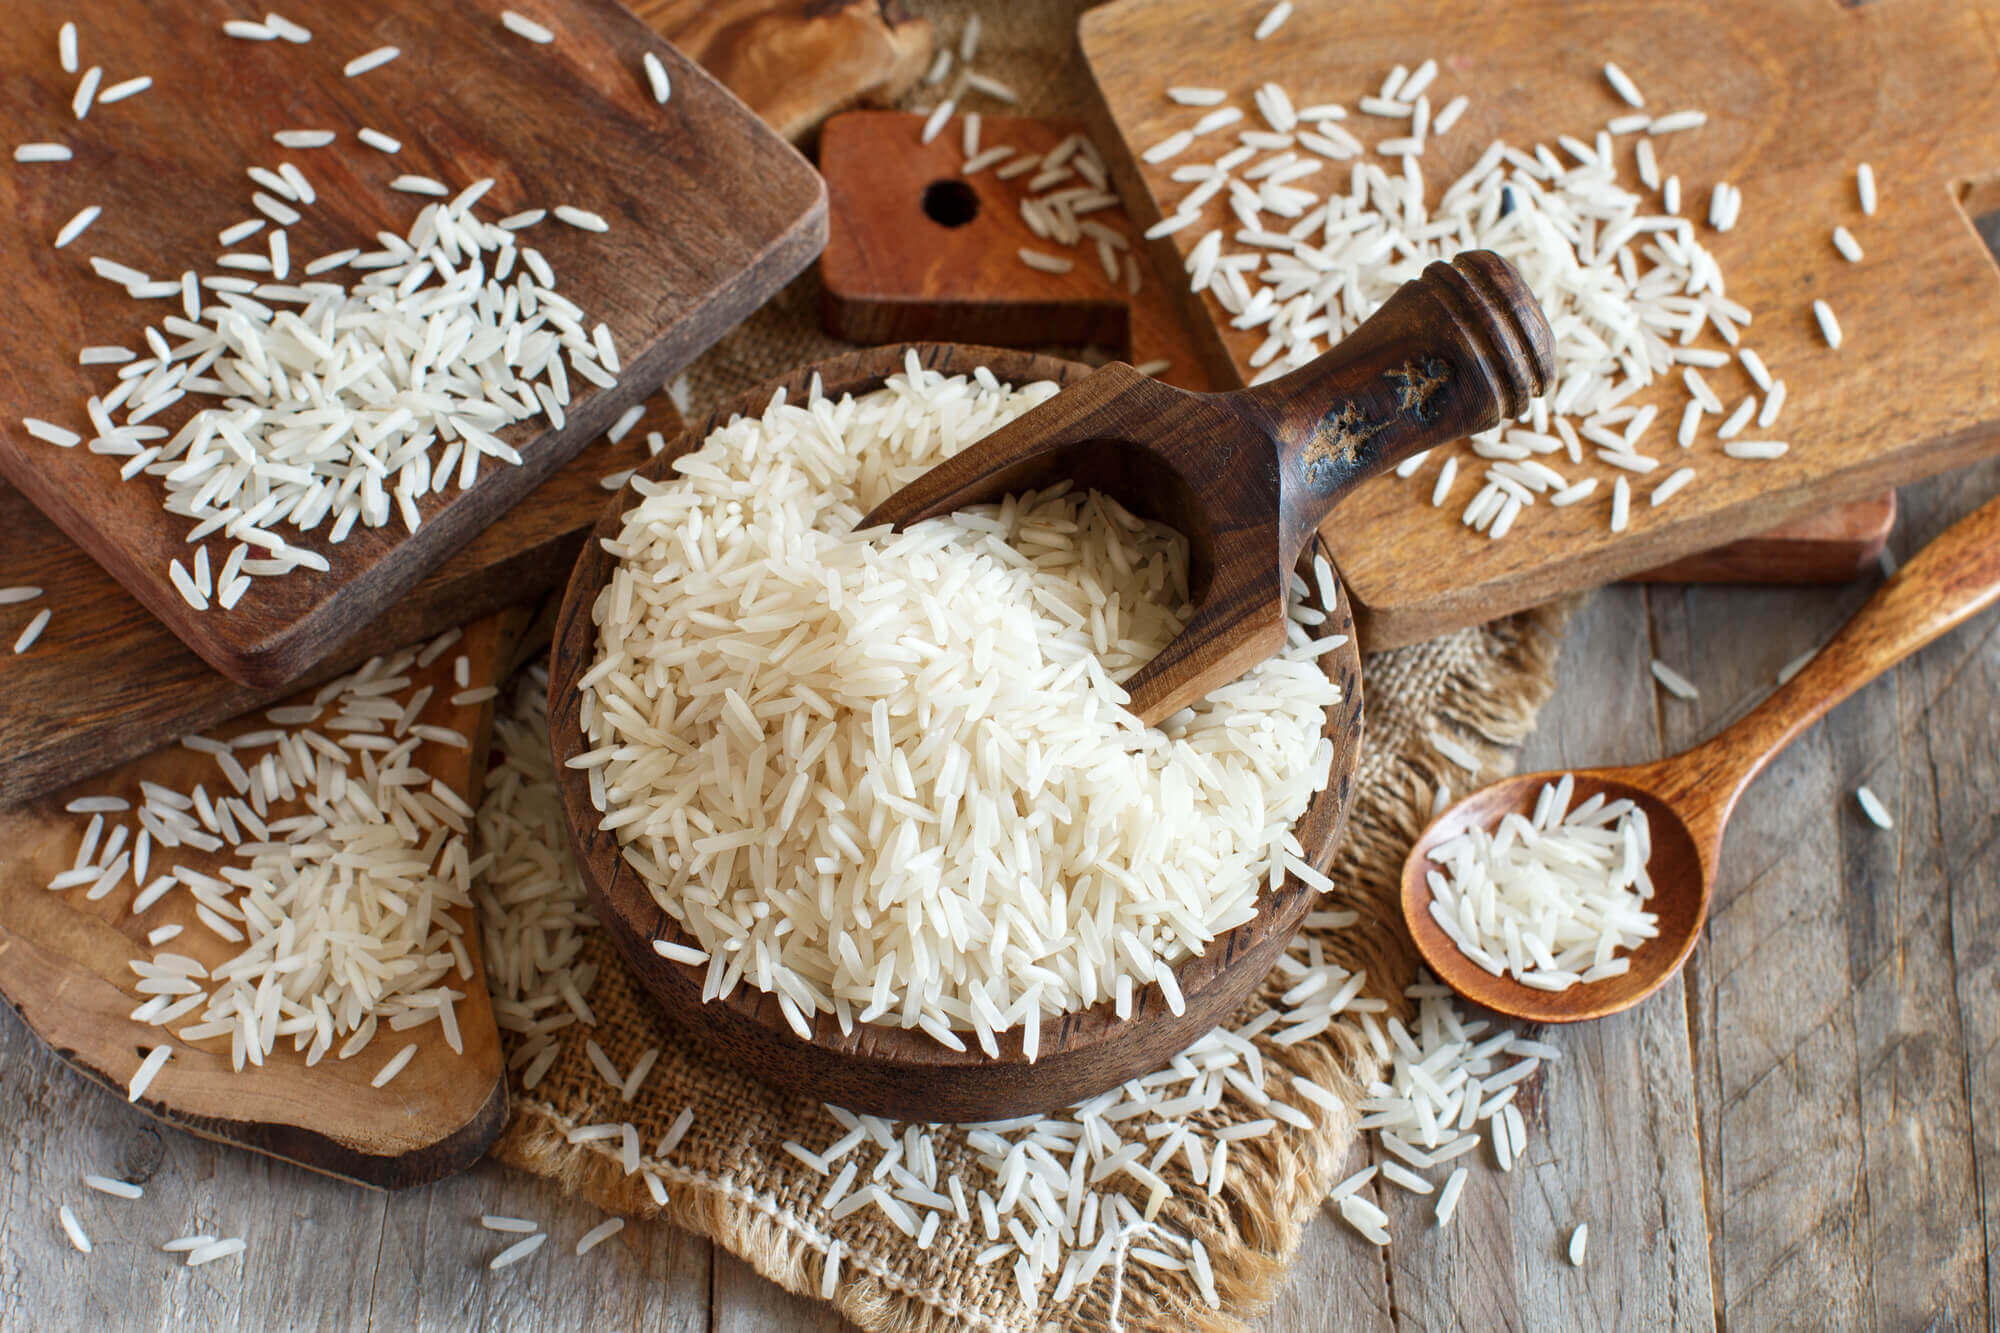 basmati rice ready to make into Rice Protein